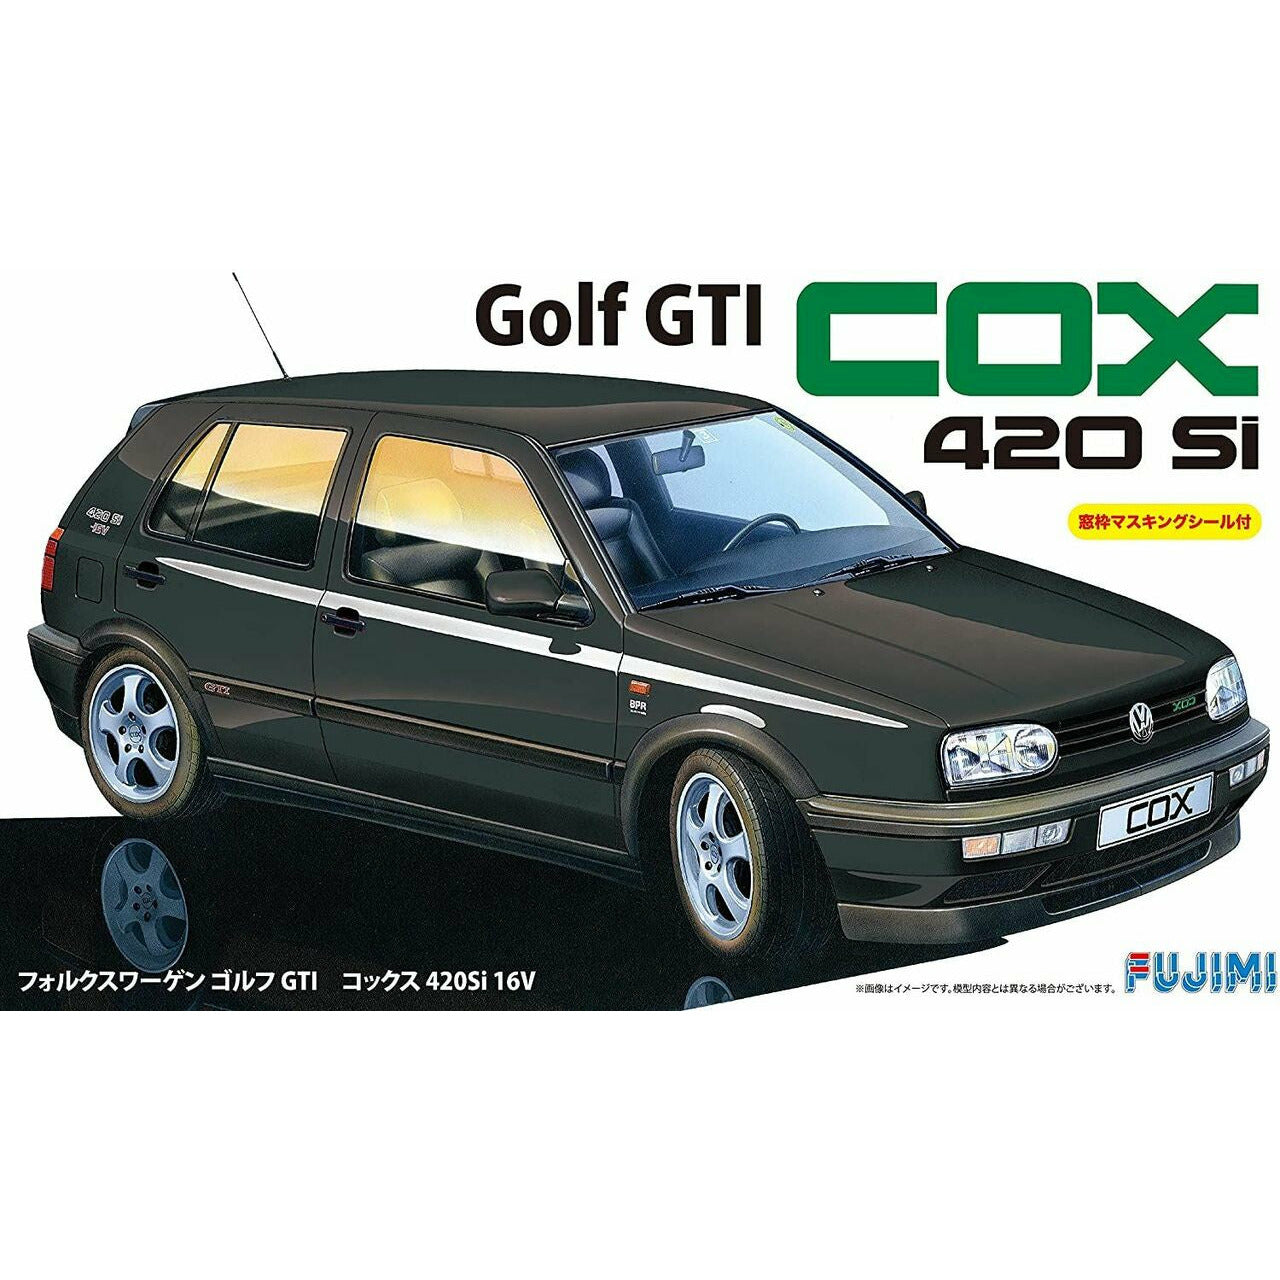 VW Golf COX 420Si 16V with Window Frame Masking 1/24 Model Car Kit #126760 by Fujimi